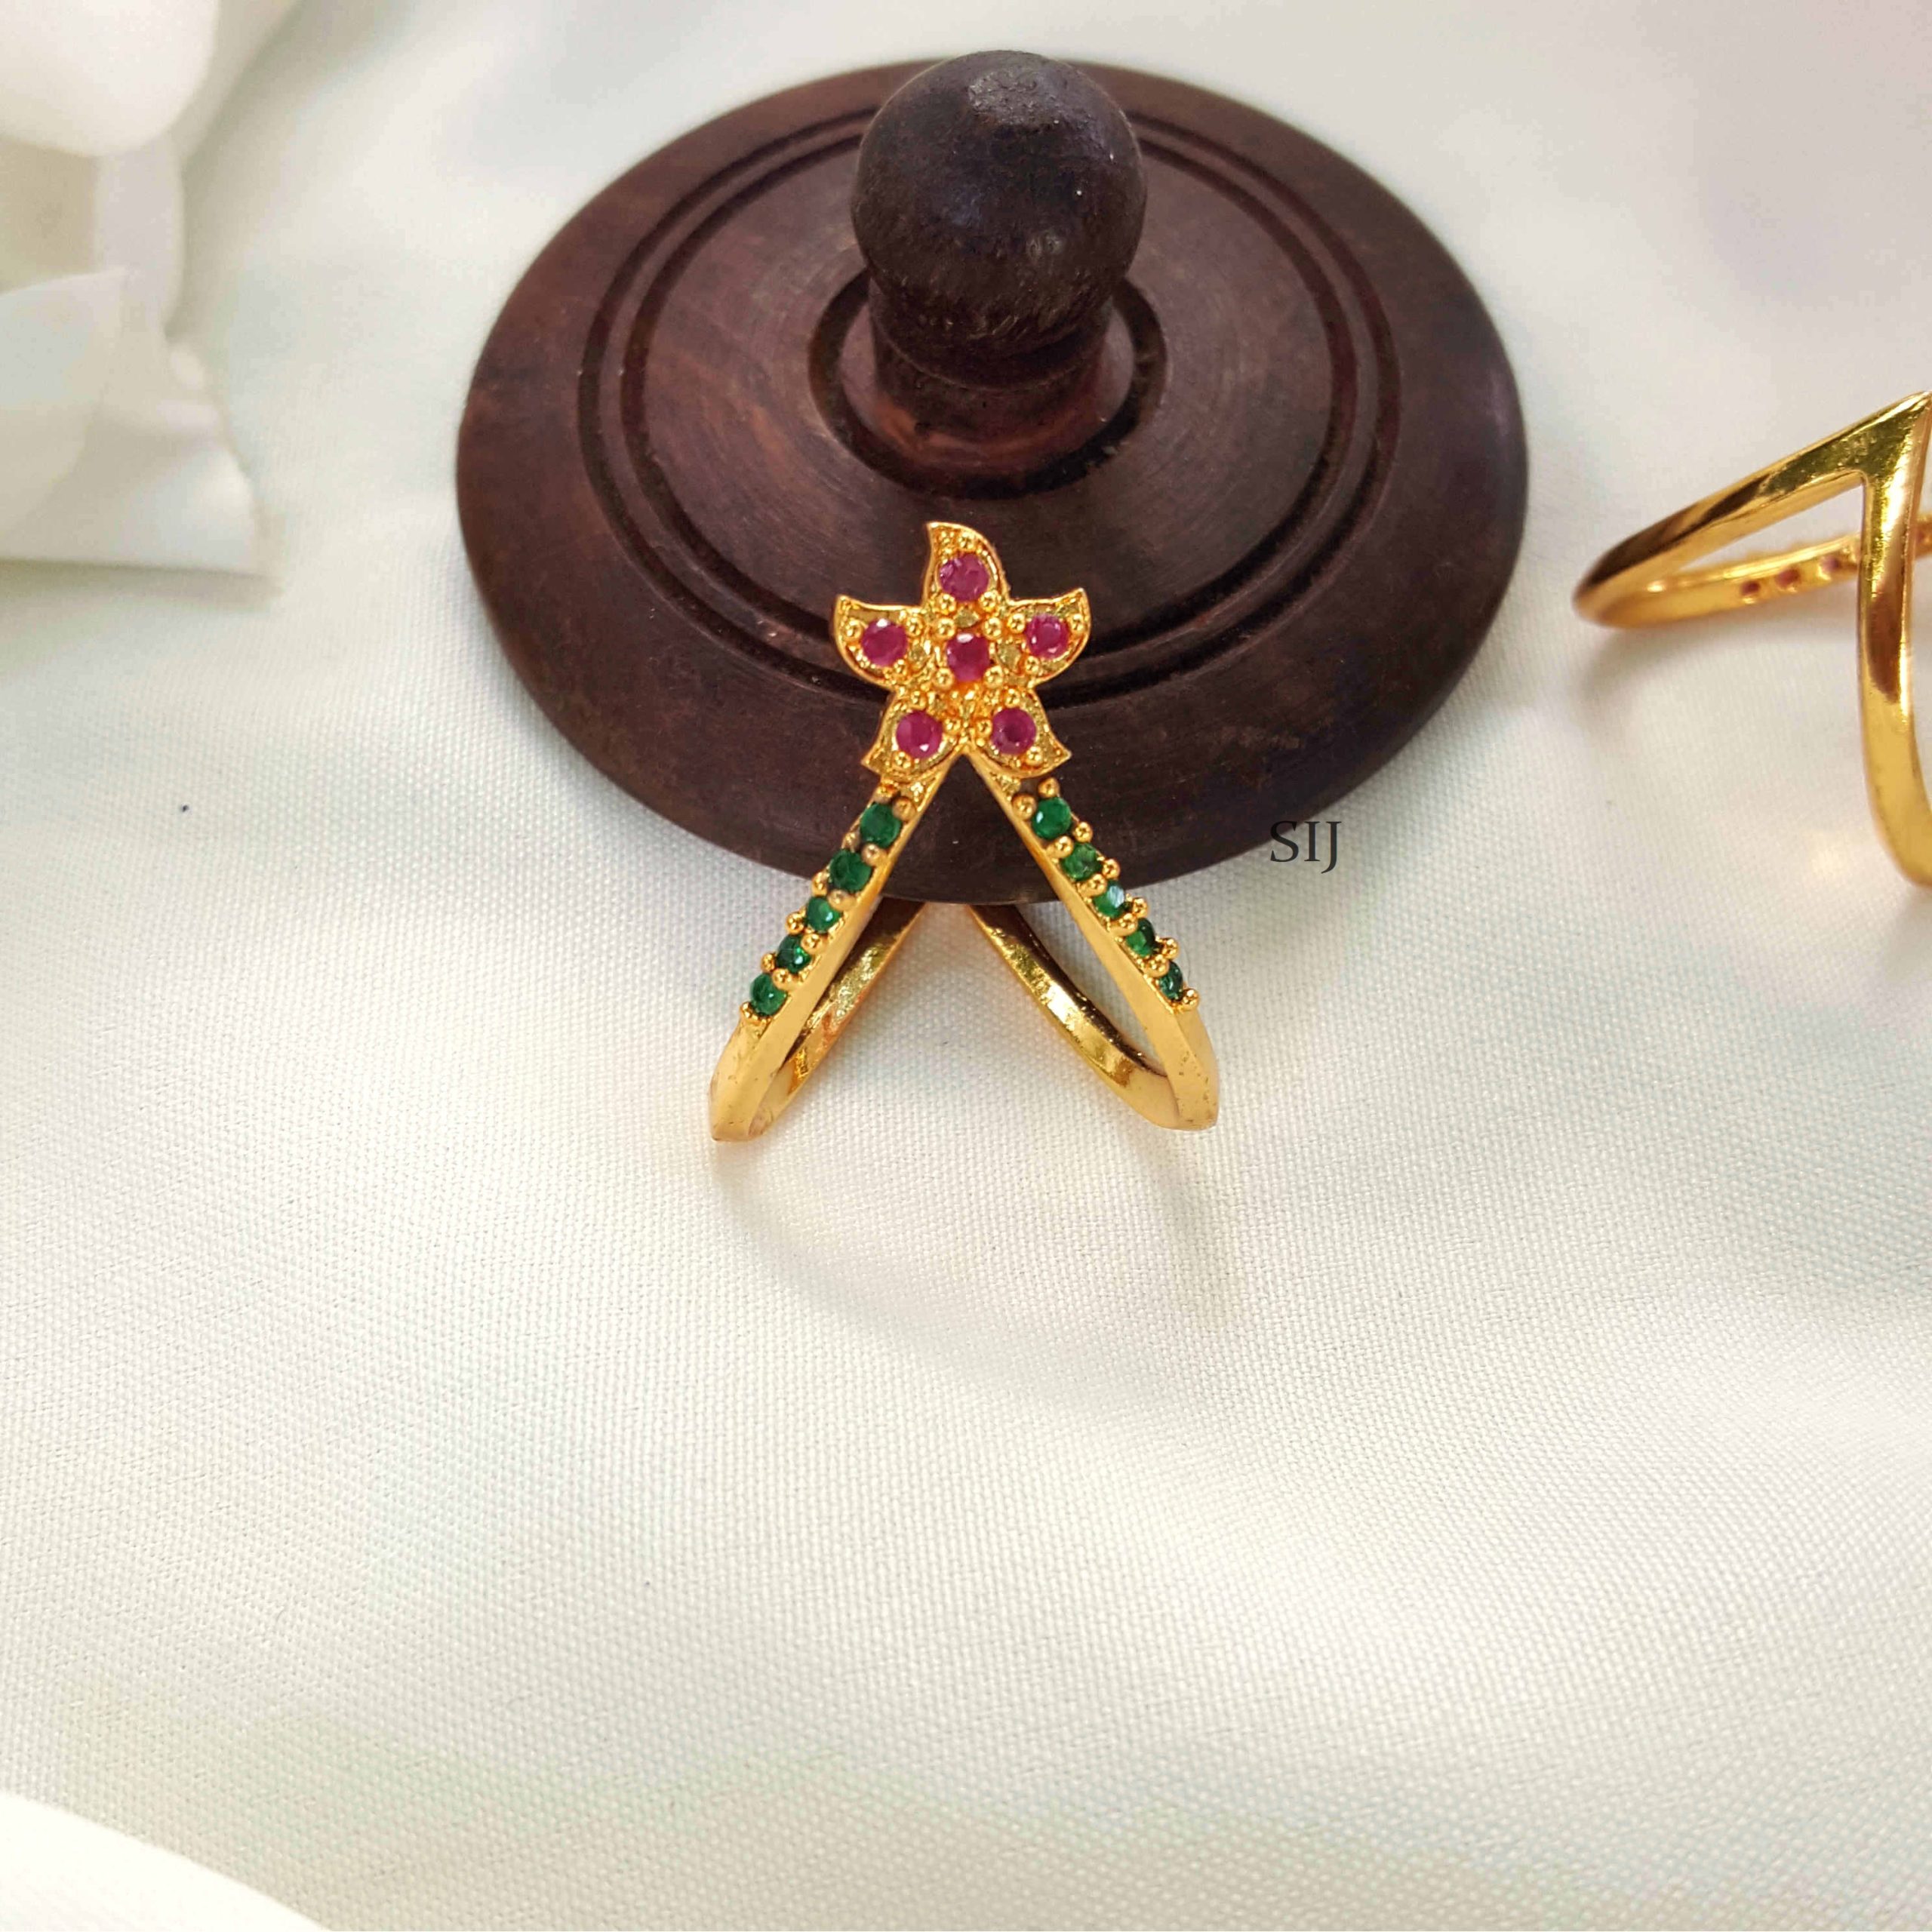 Joyalukkas 22kt Purity Gold Ring For Women : Amazon.in: Fashion